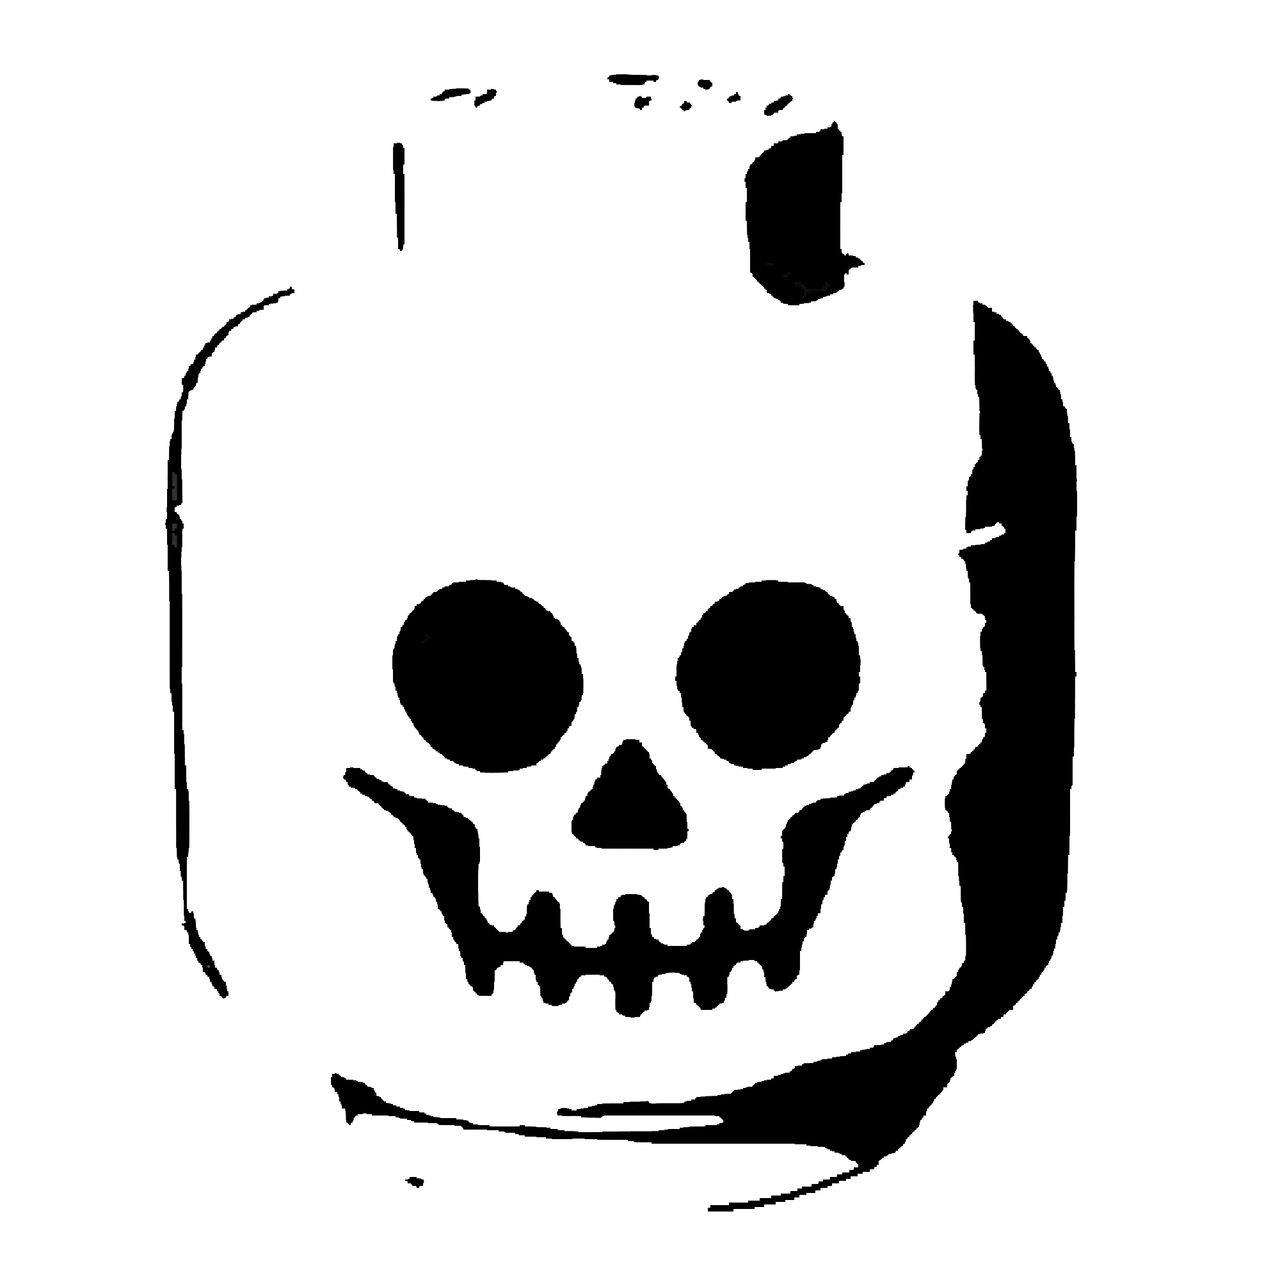 Lego Skeleton Skull by AnarchoStencilism on DeviantArt